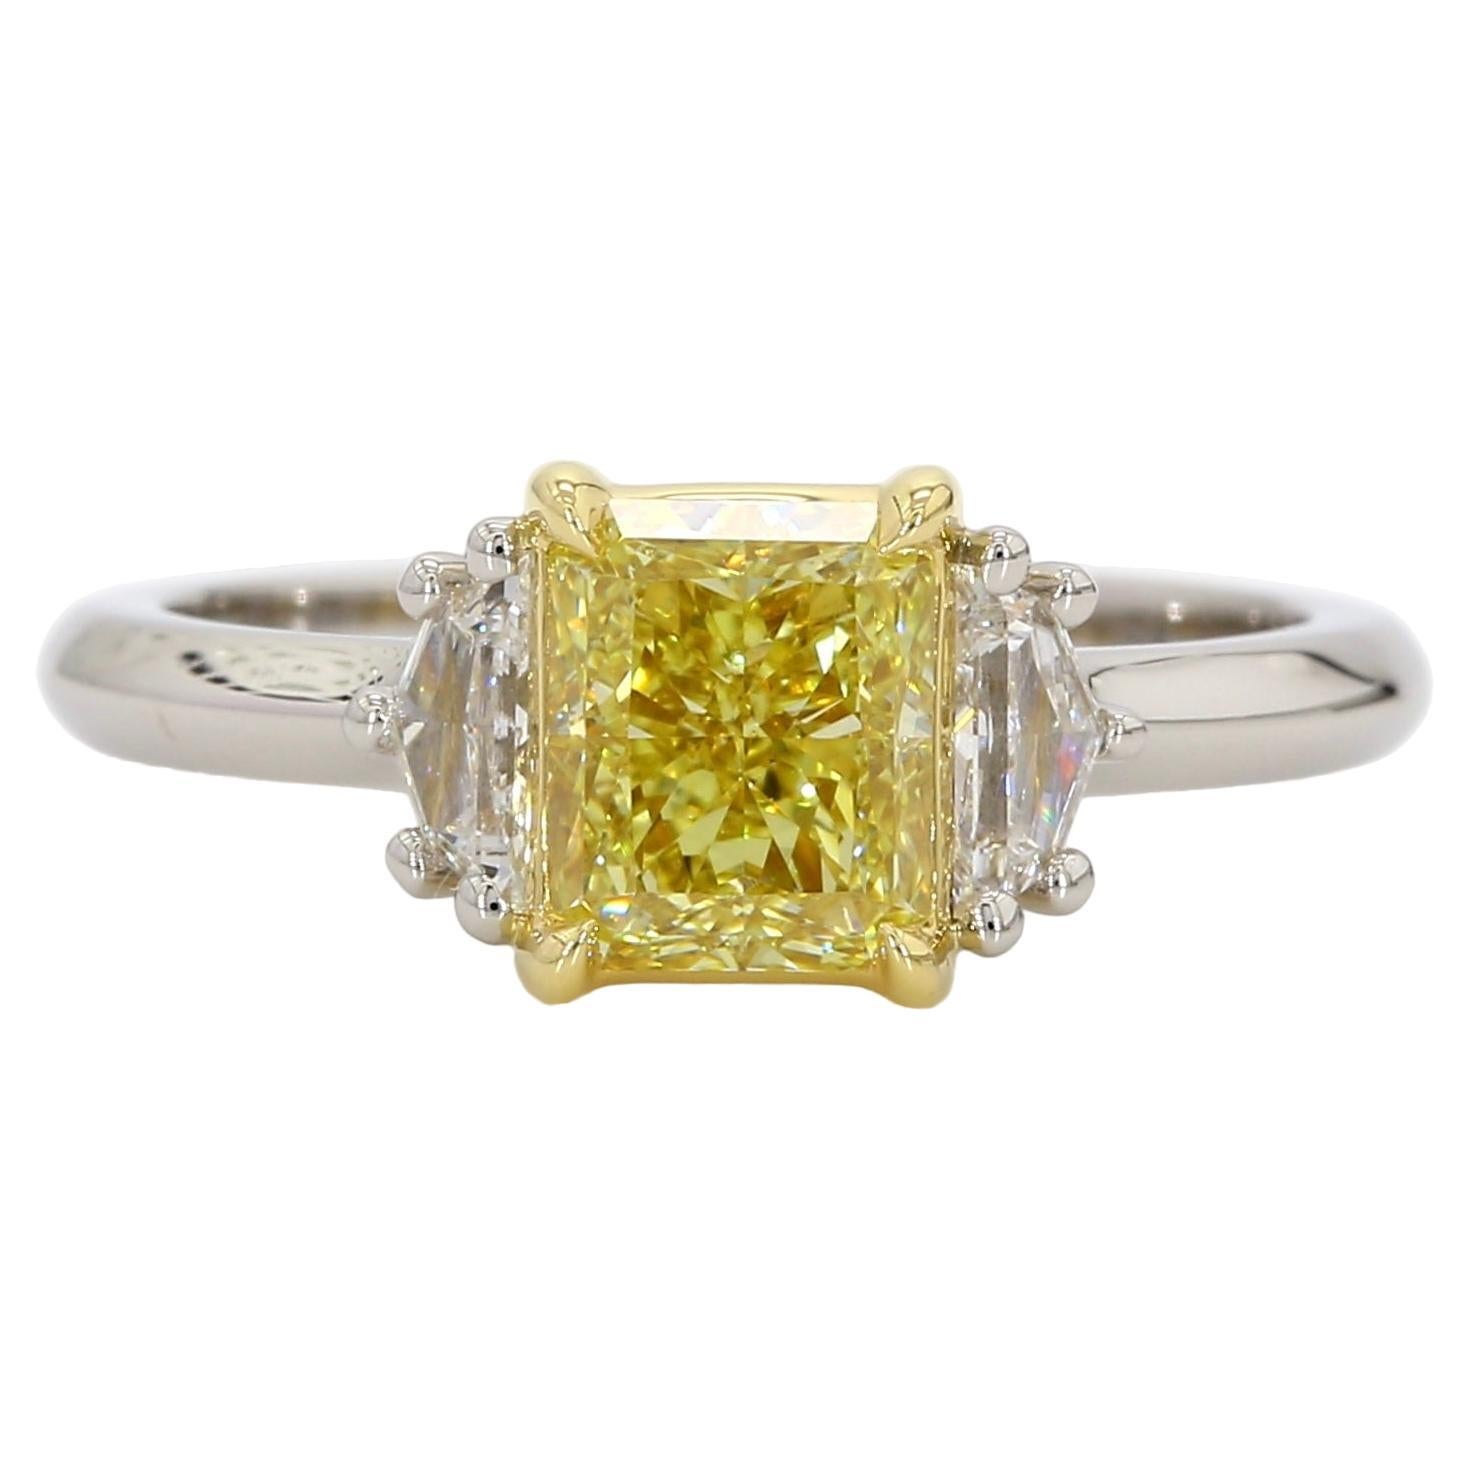 1.42 Carat Fancy Yellow Diamond Three-Stone Engagement Ring, GIA, IF, Platinum.